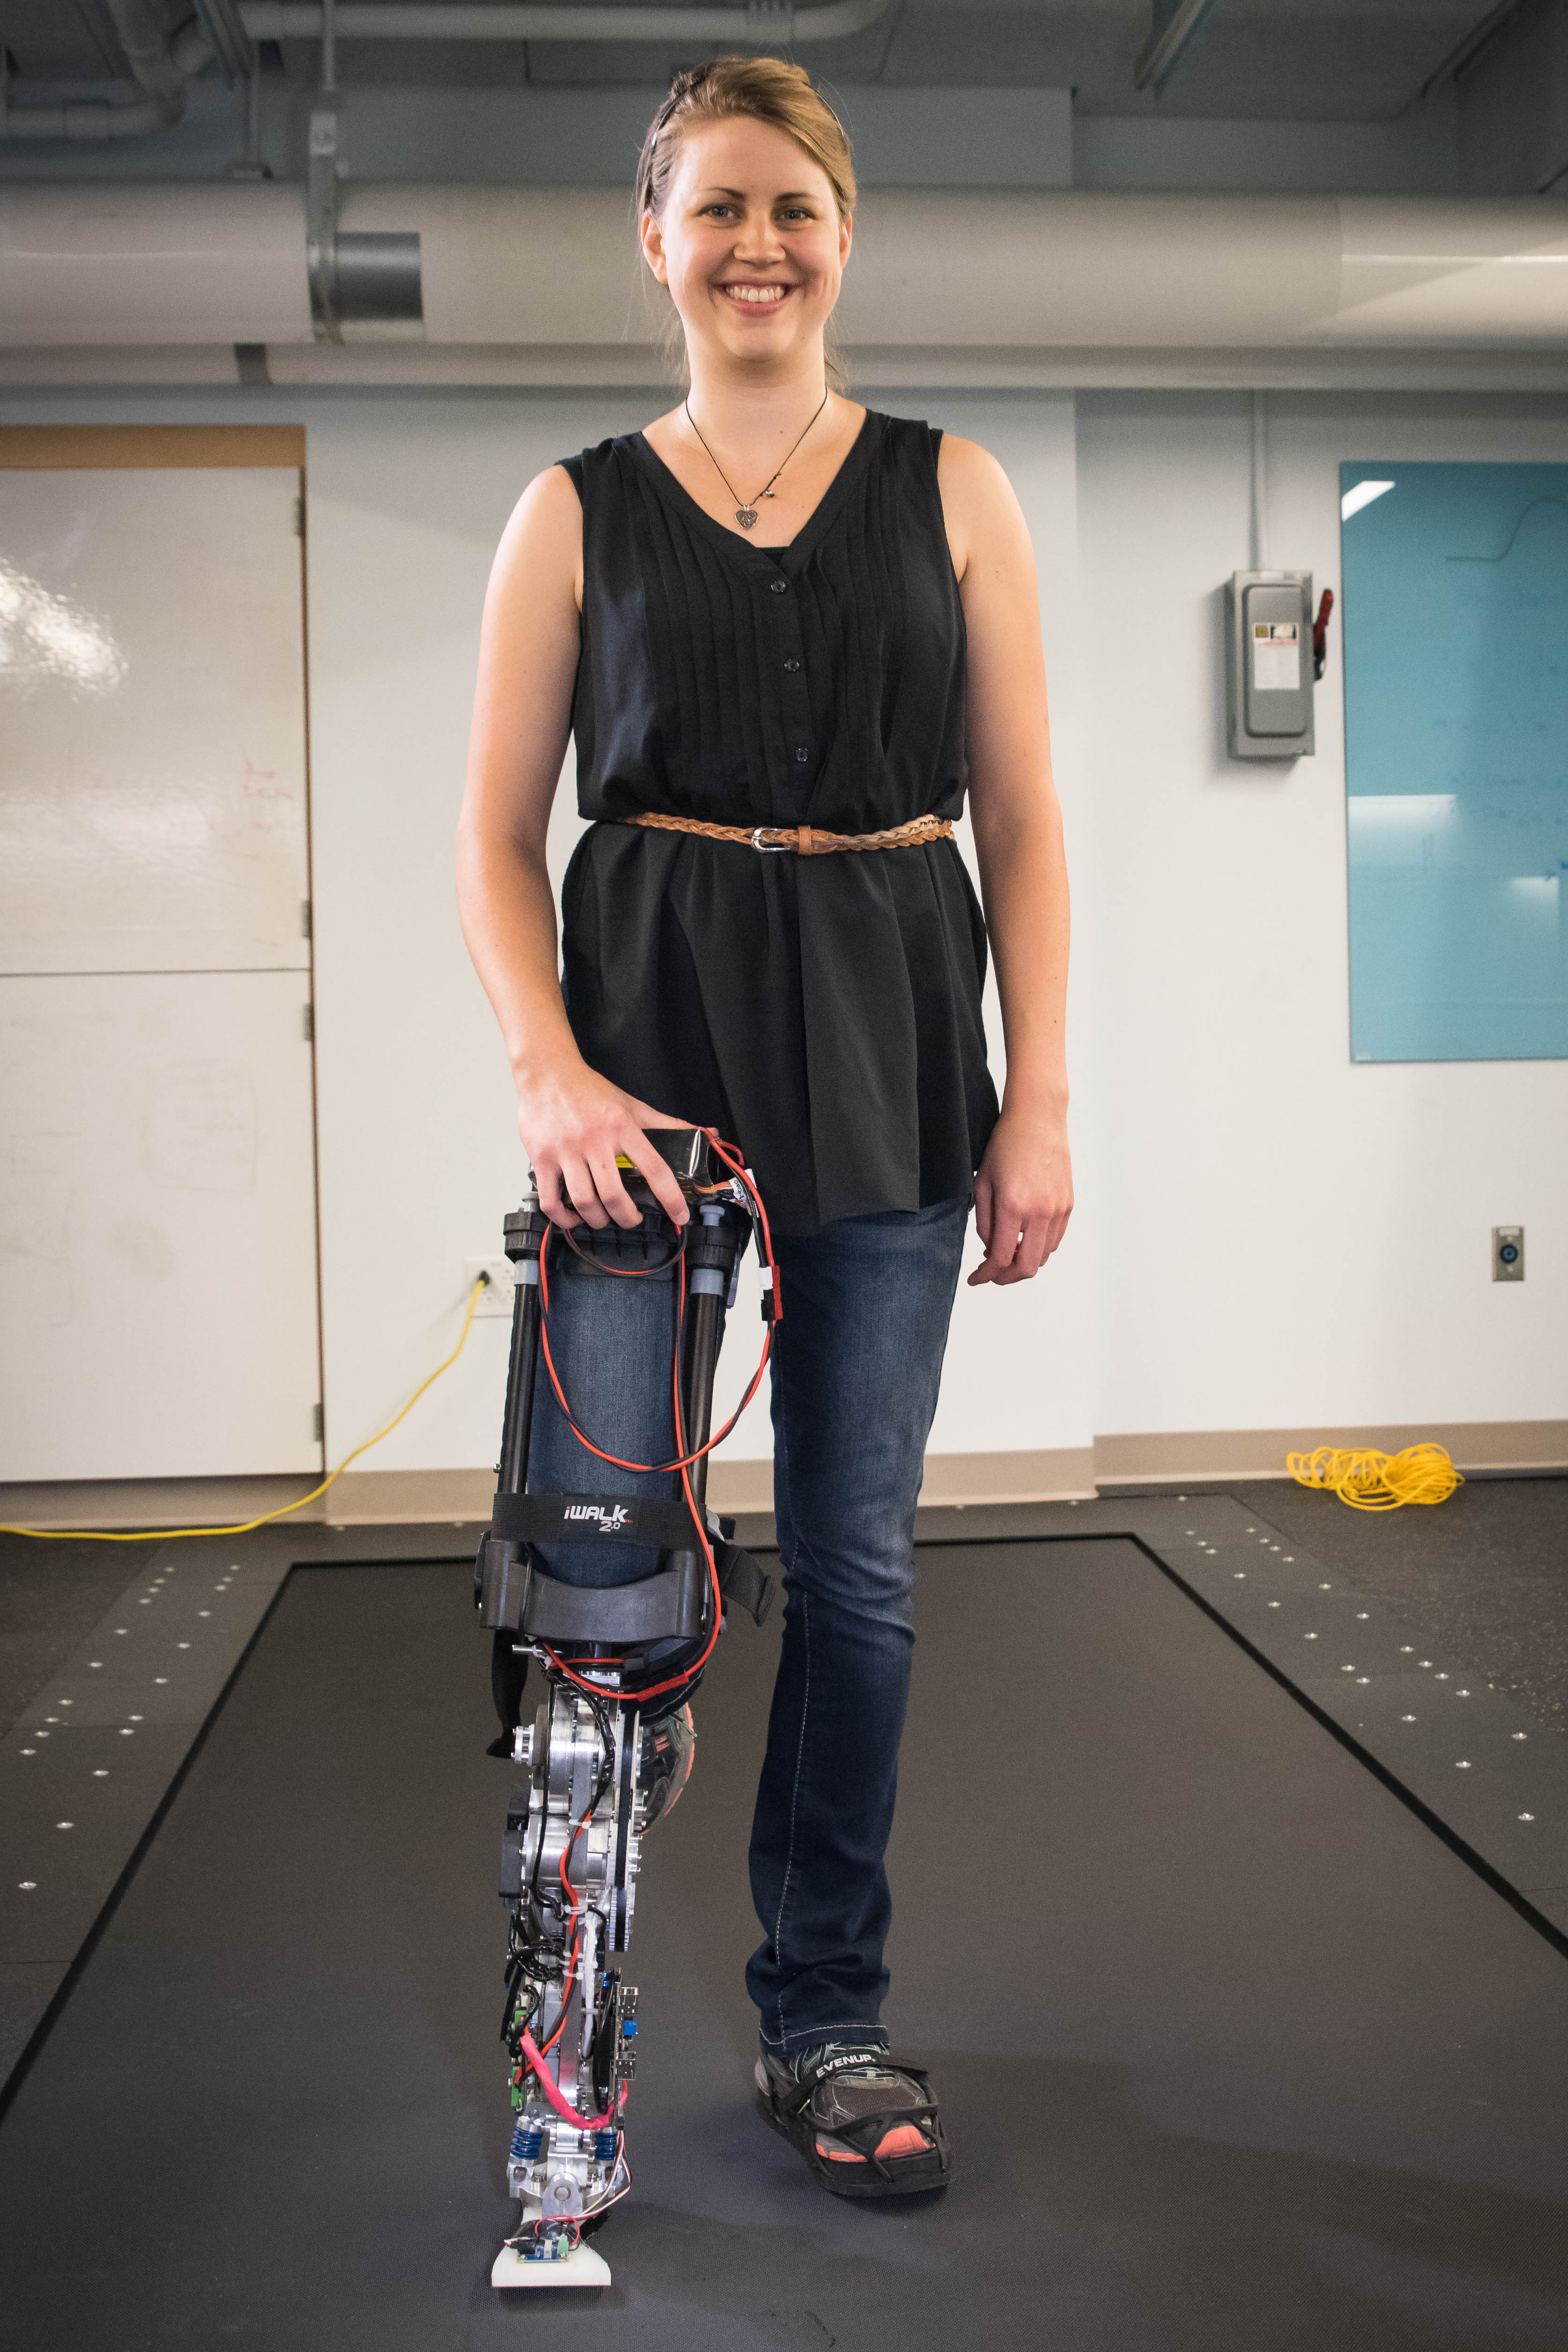 Rachel Gehlhar with the powered prosthetic leg